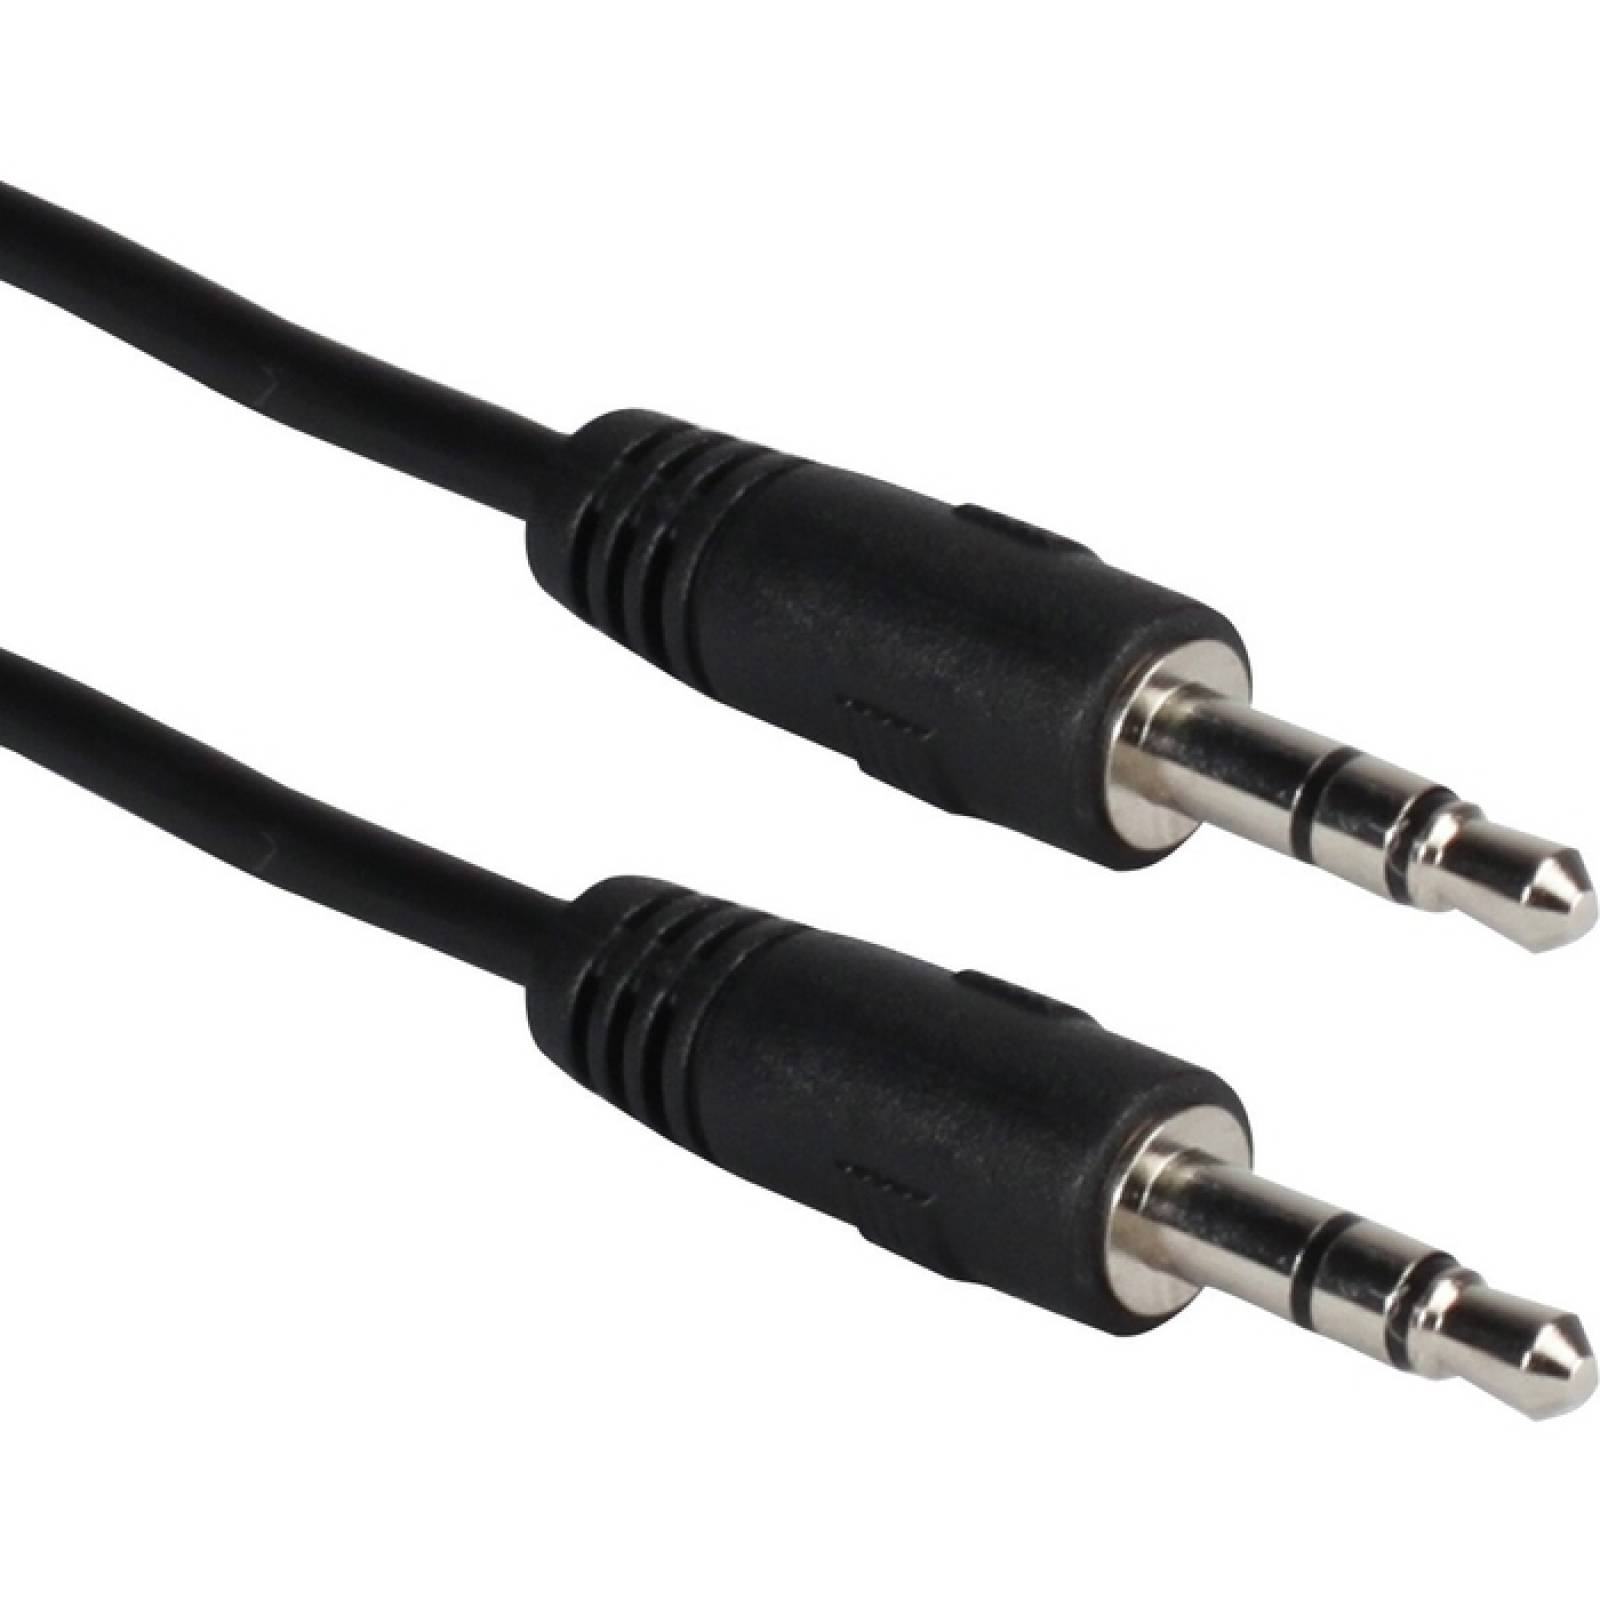 Cable de audio para altavoz QVS